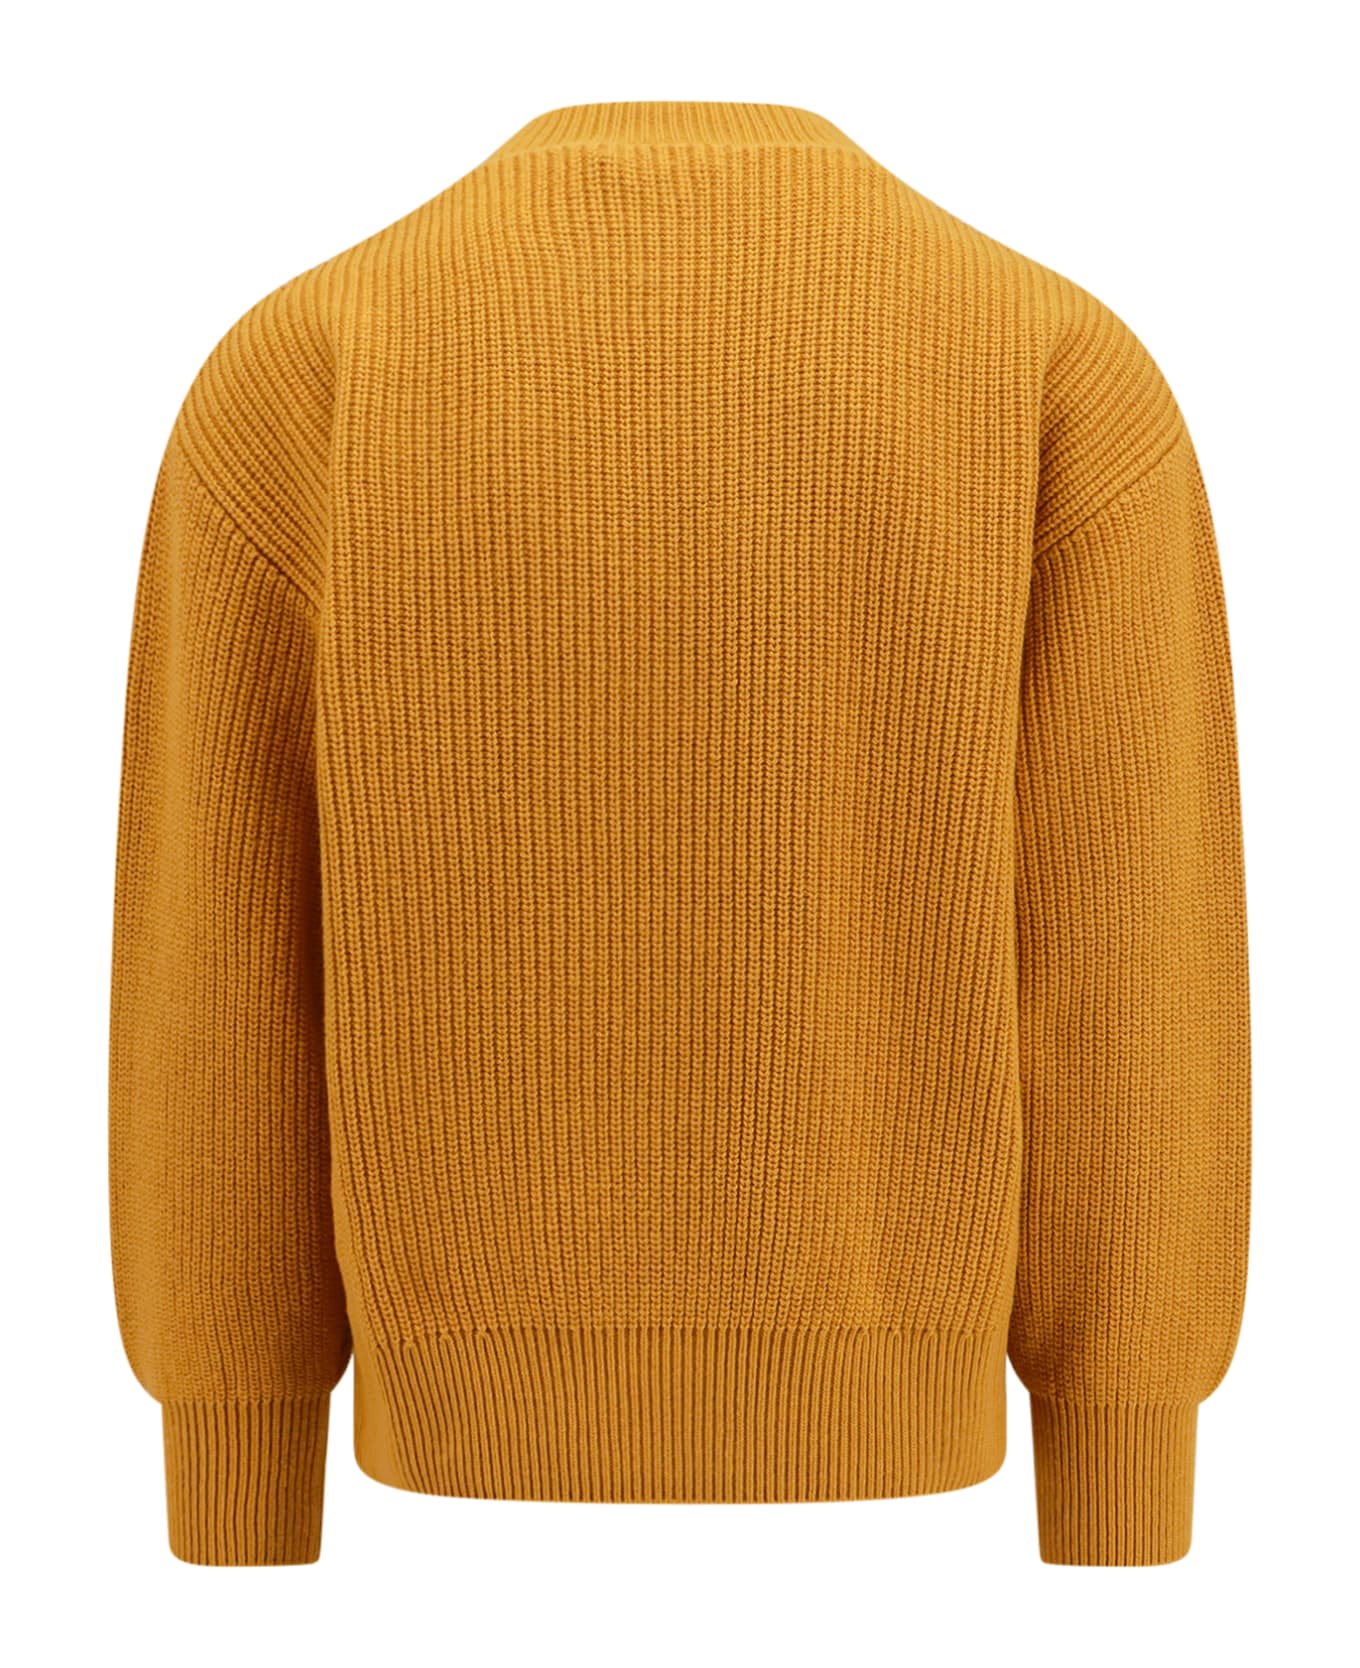 Moncler Genius Sweater - Yellow